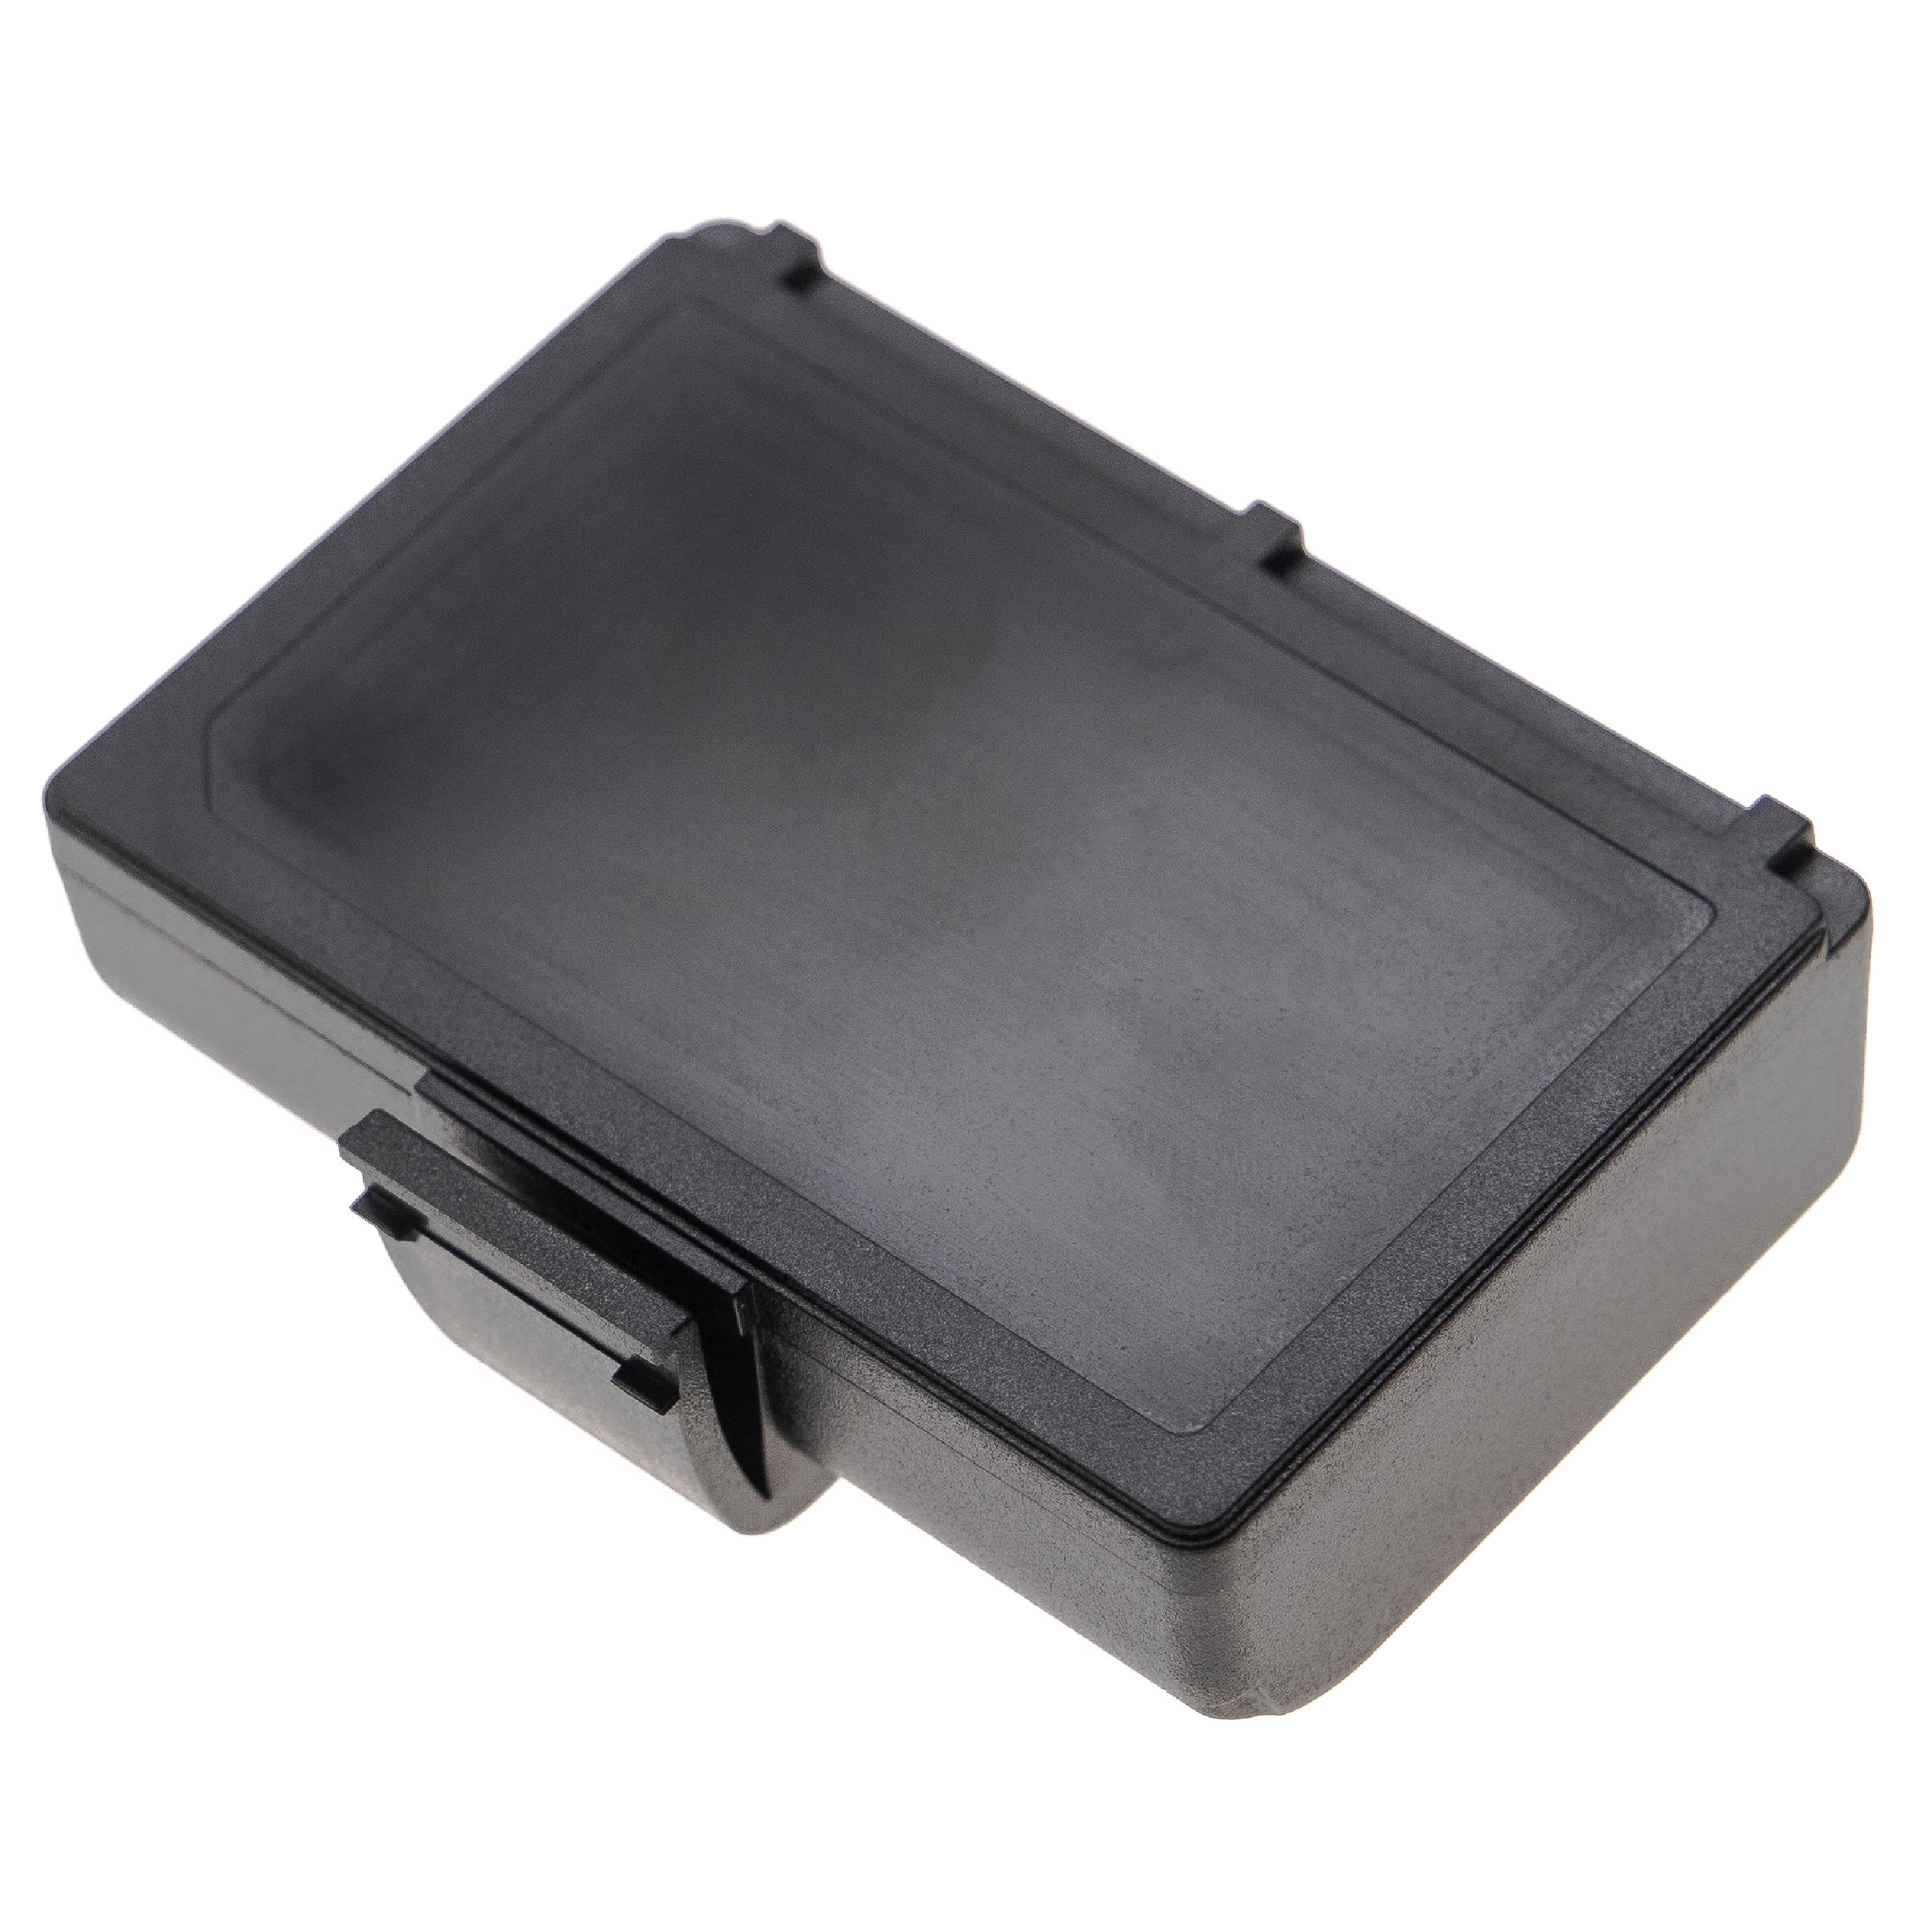 Printer Battery Replacement for Zebra AT16004, BTRY-MPP-34MA1-01, BTRY-MPP-34MAHC1-01 - 3400mAh 7.4V Li-Ion